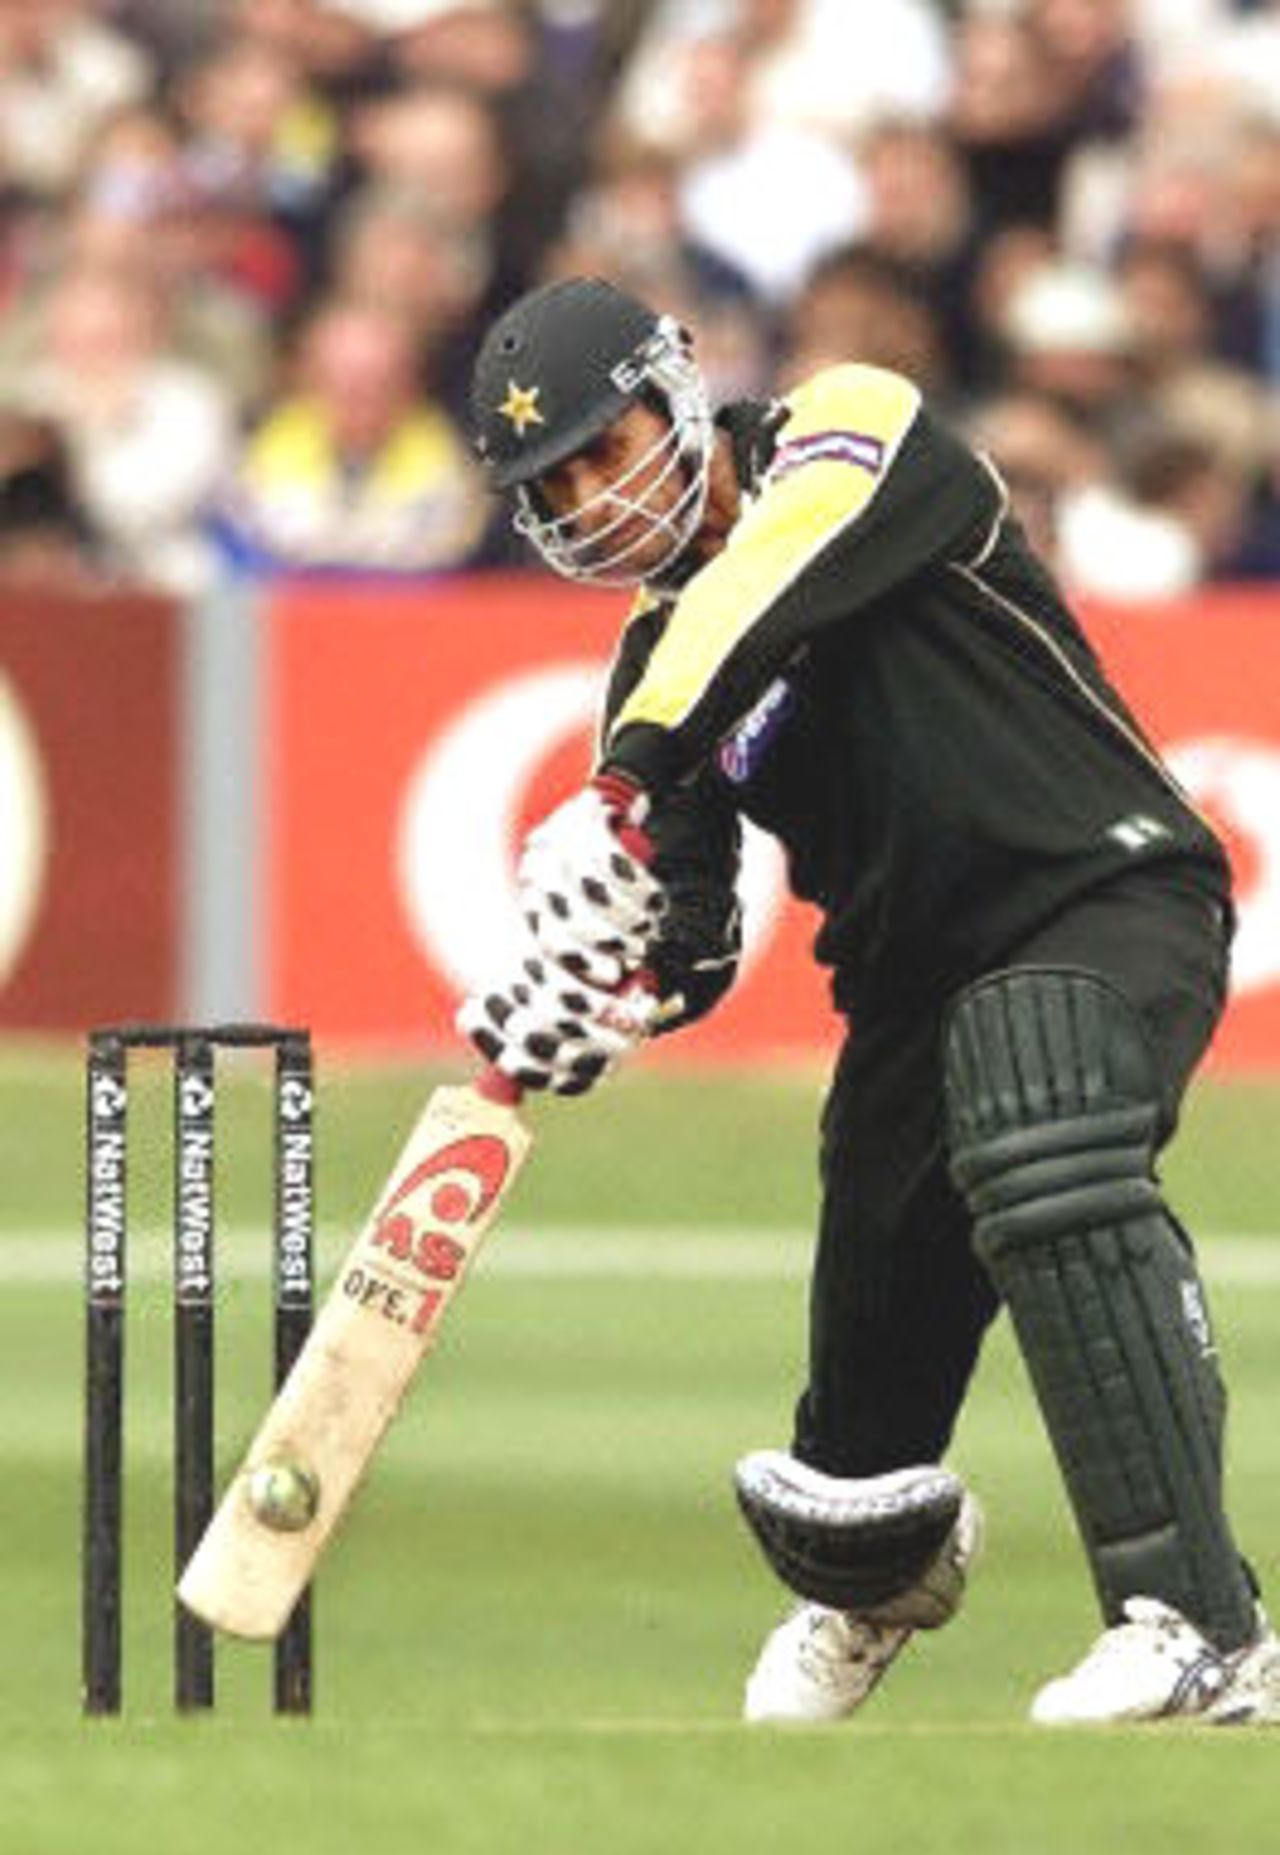 Abdur Razzaq slams a ball to the boundary from Collingwood, 7th ODI at Headingley, 17 June 2001.